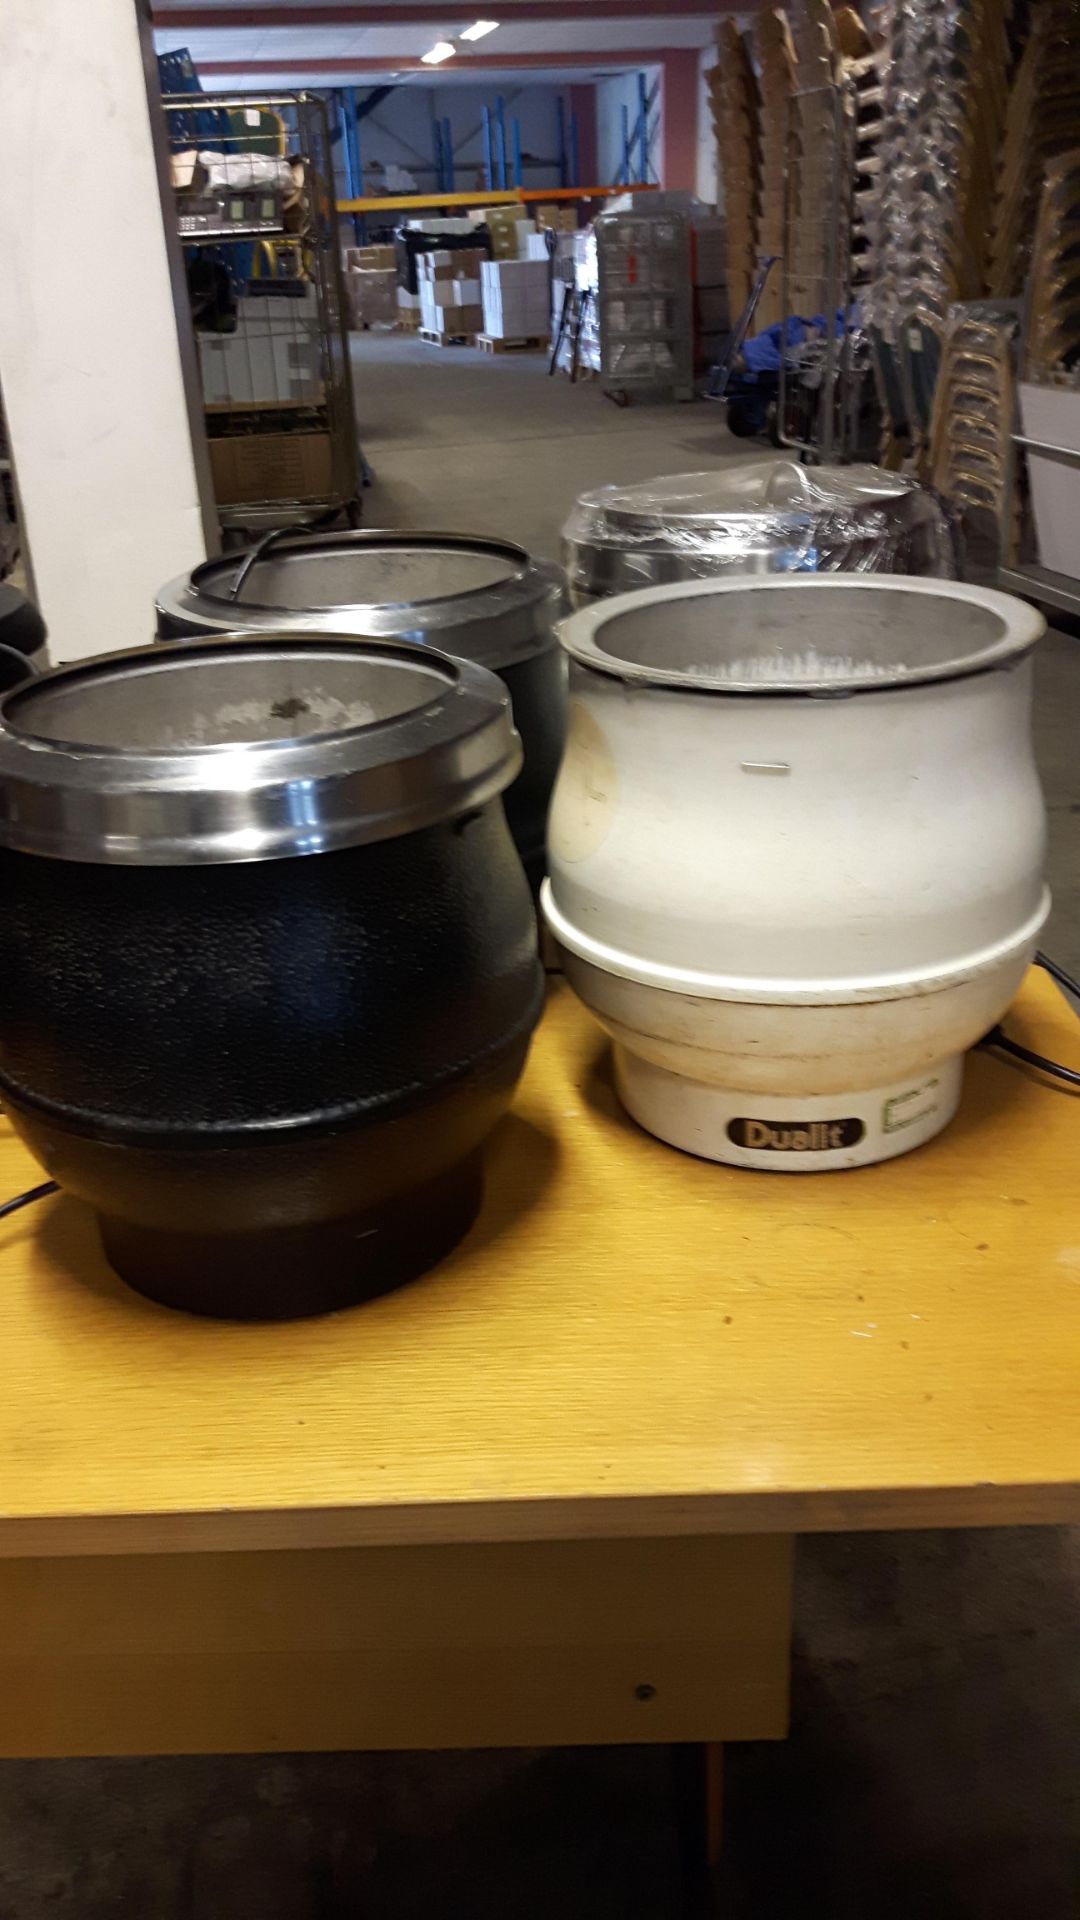 4 x dualit soup kettles